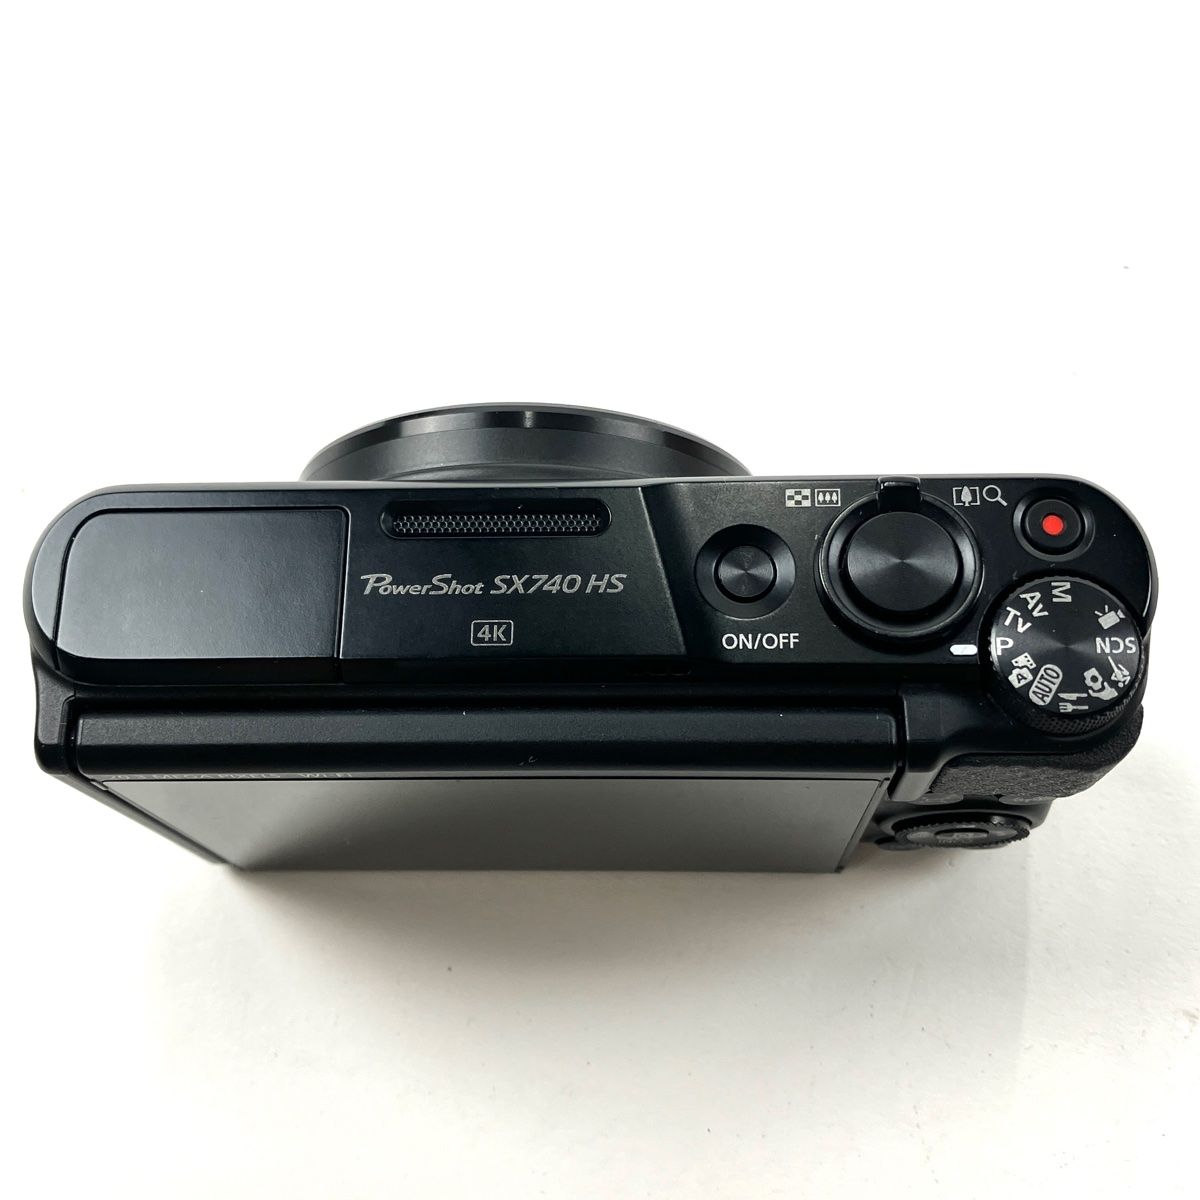 ☆ Canon キャノン PowerShot SX740HS コンパクトデジタルカメラ - カメラ、光学機器